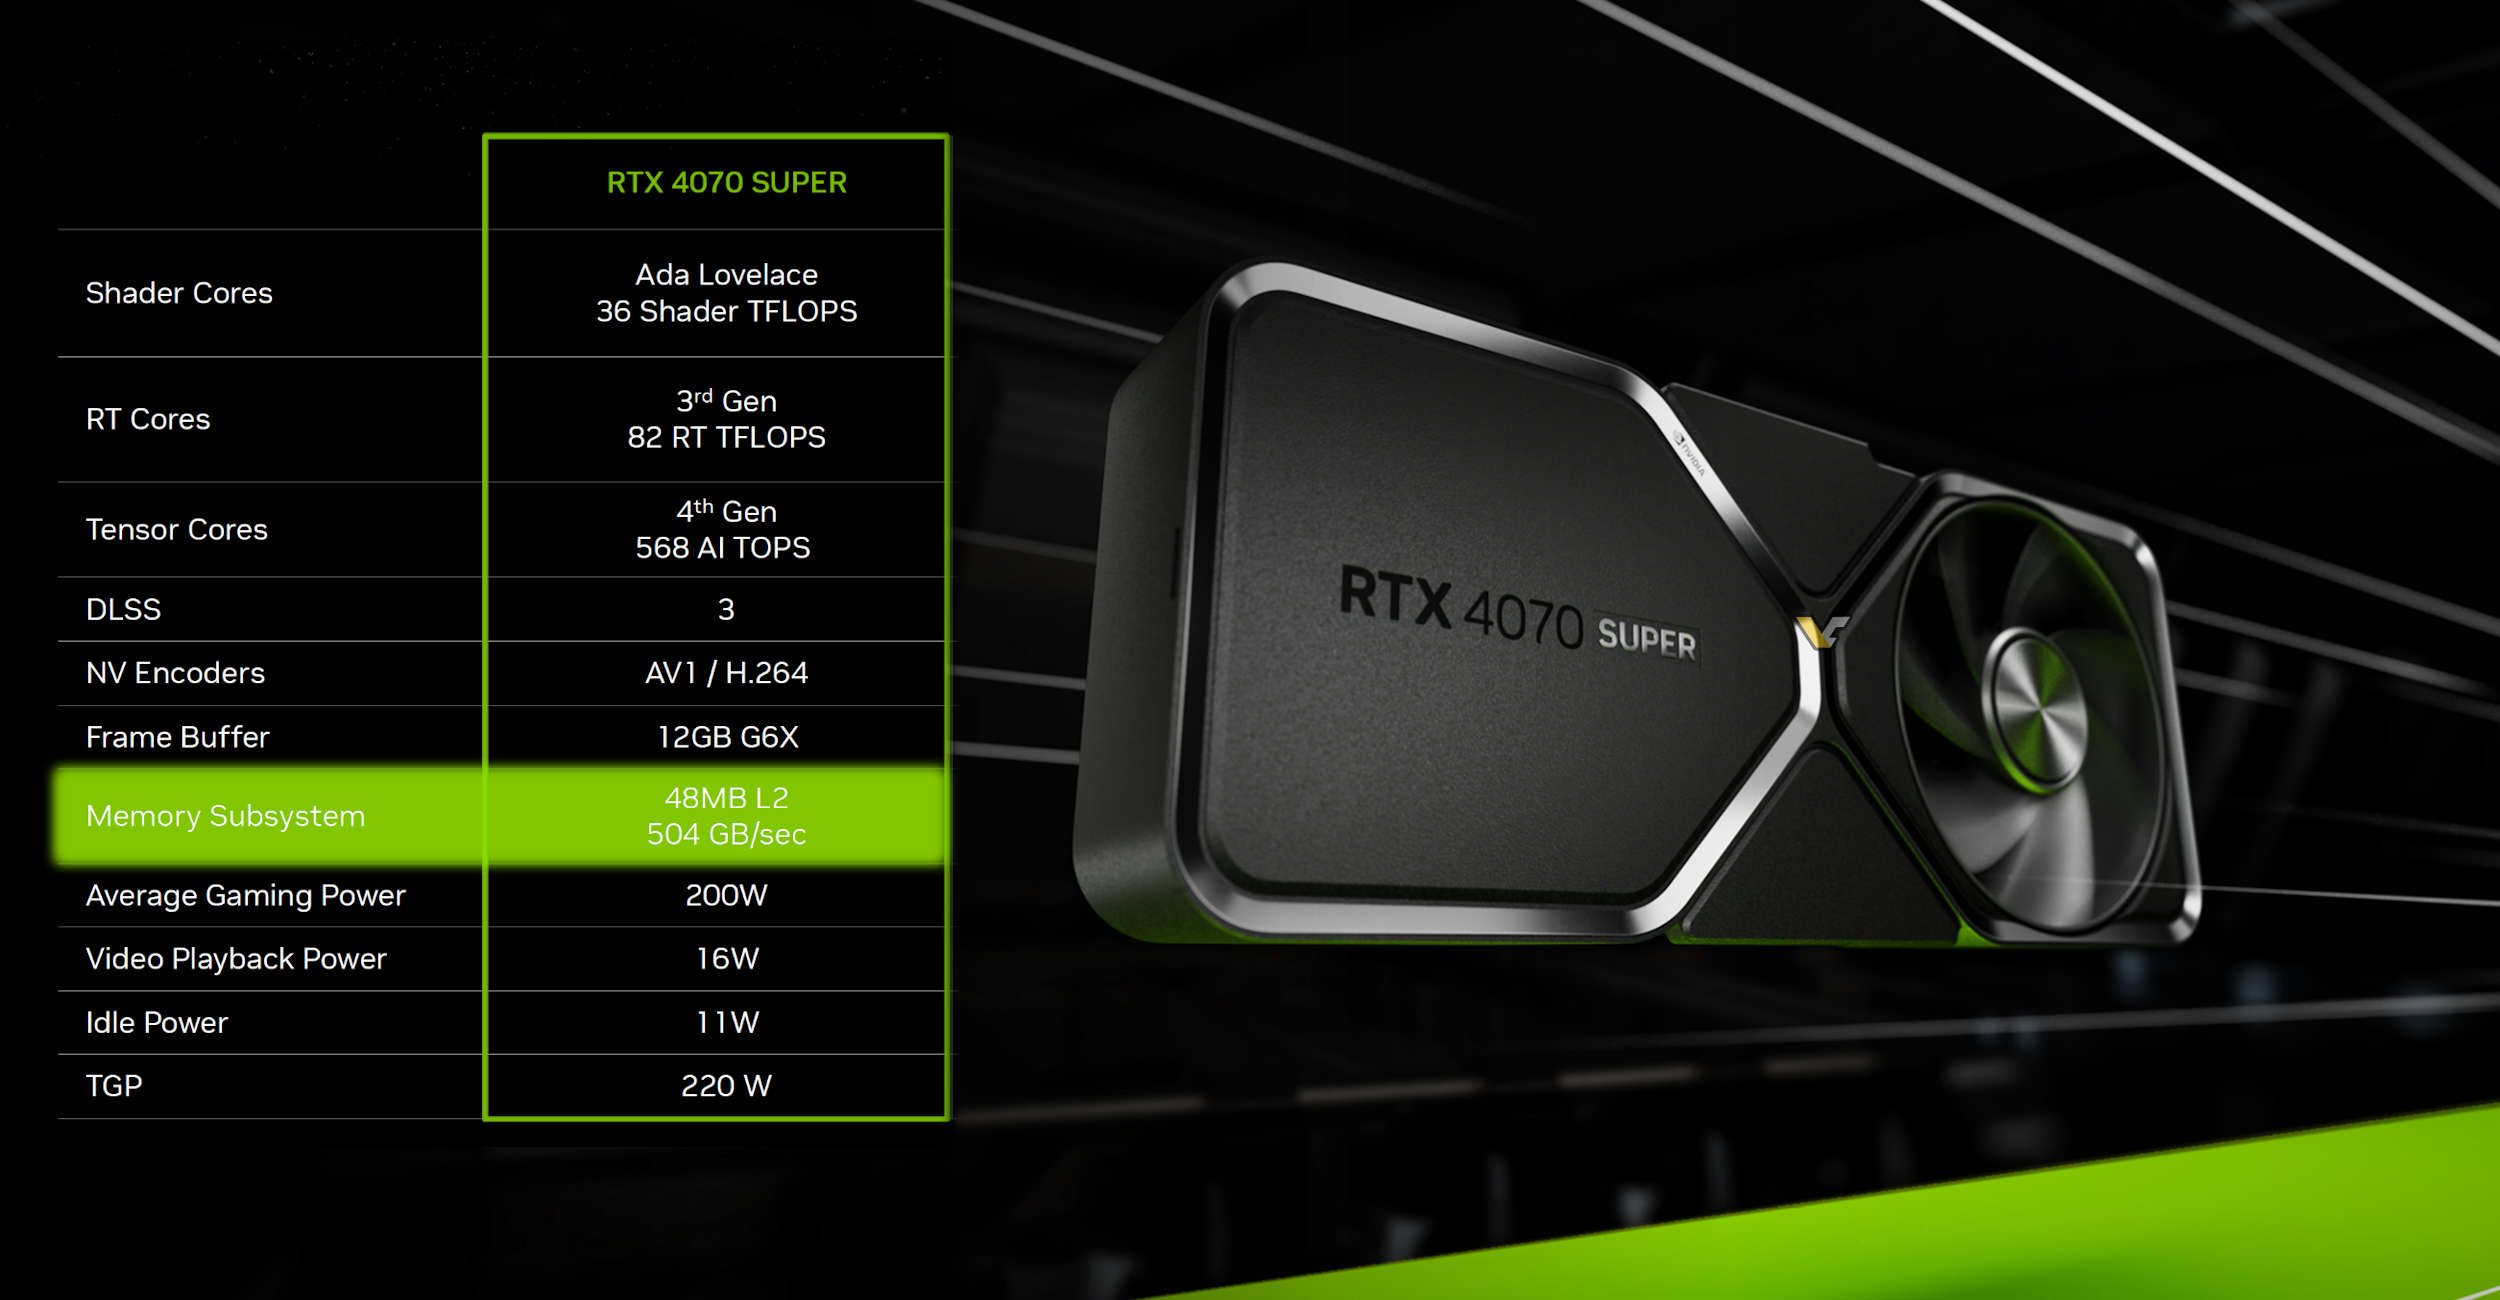 La GPU NVIDIA RTX 4070 SUPER AD104 cuenta con 48 MB de caché L2, no 36 MB como se afirmó anteriormente